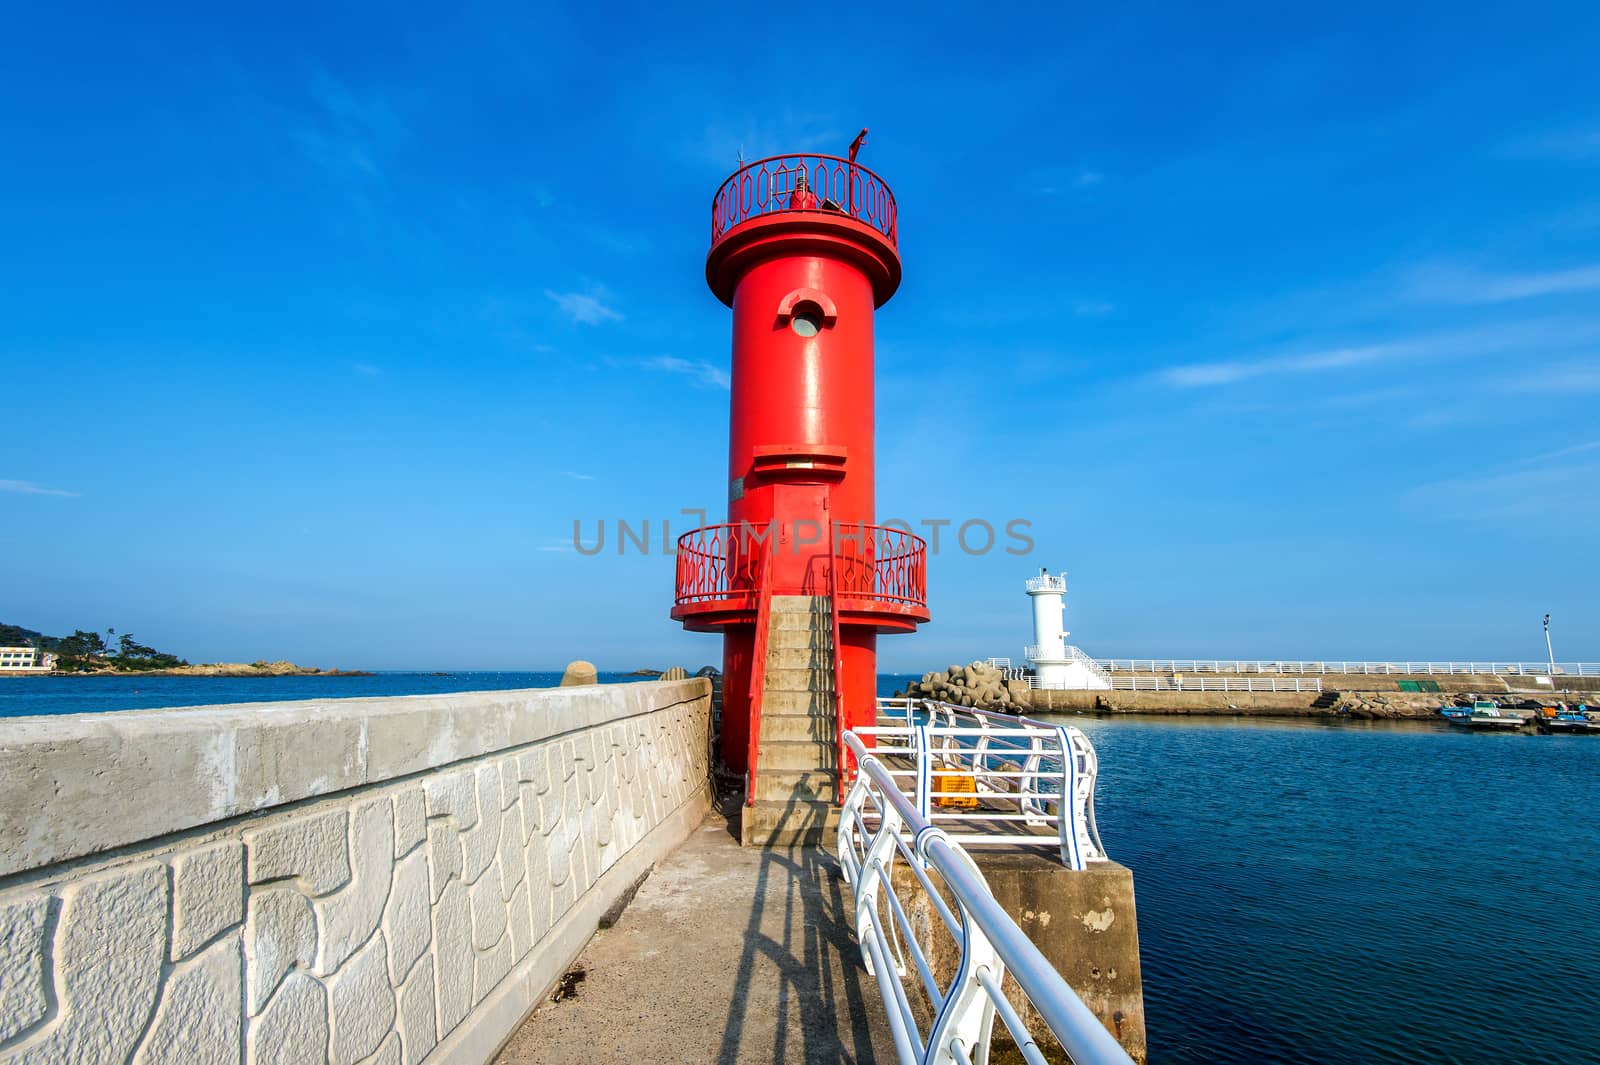 Lighthouse on sea by gutarphotoghaphy